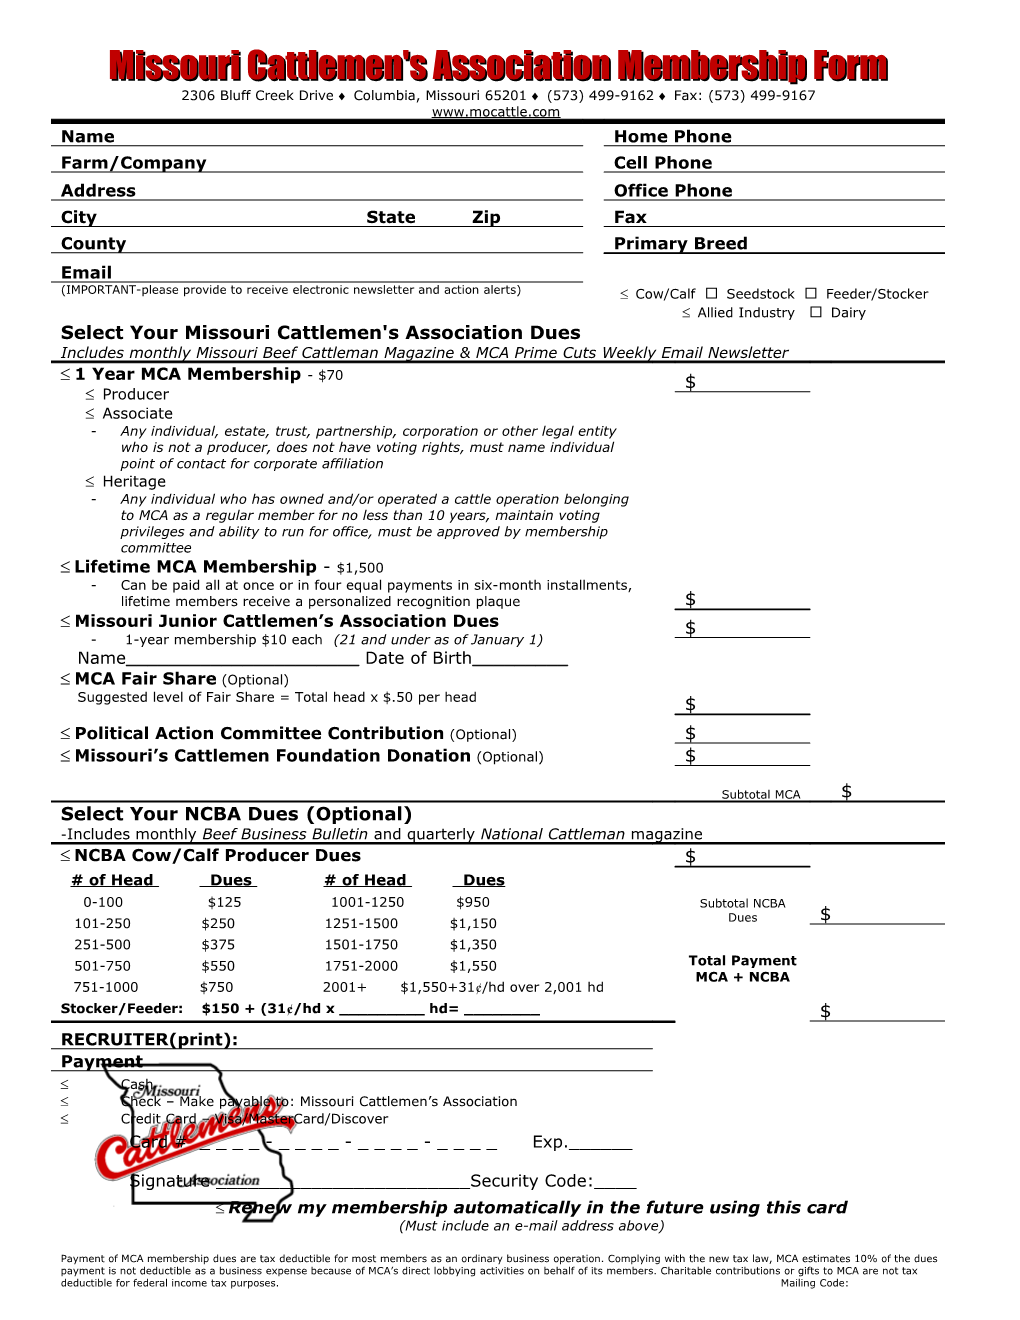 2009 Missouri Cattlemen's Association Membership Invoice